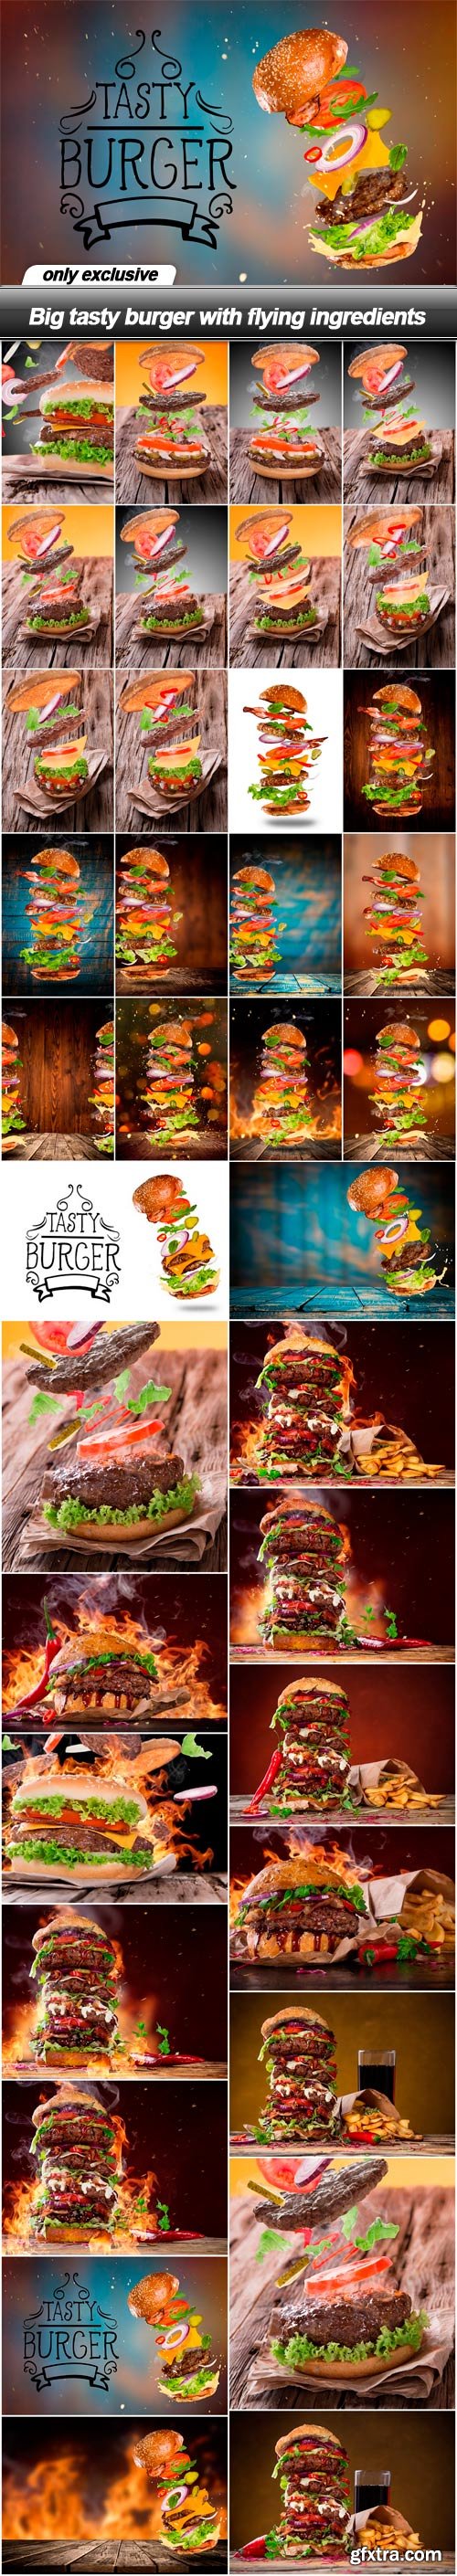 Big tasty burger with flying ingredients - 36 UHQ JPEG